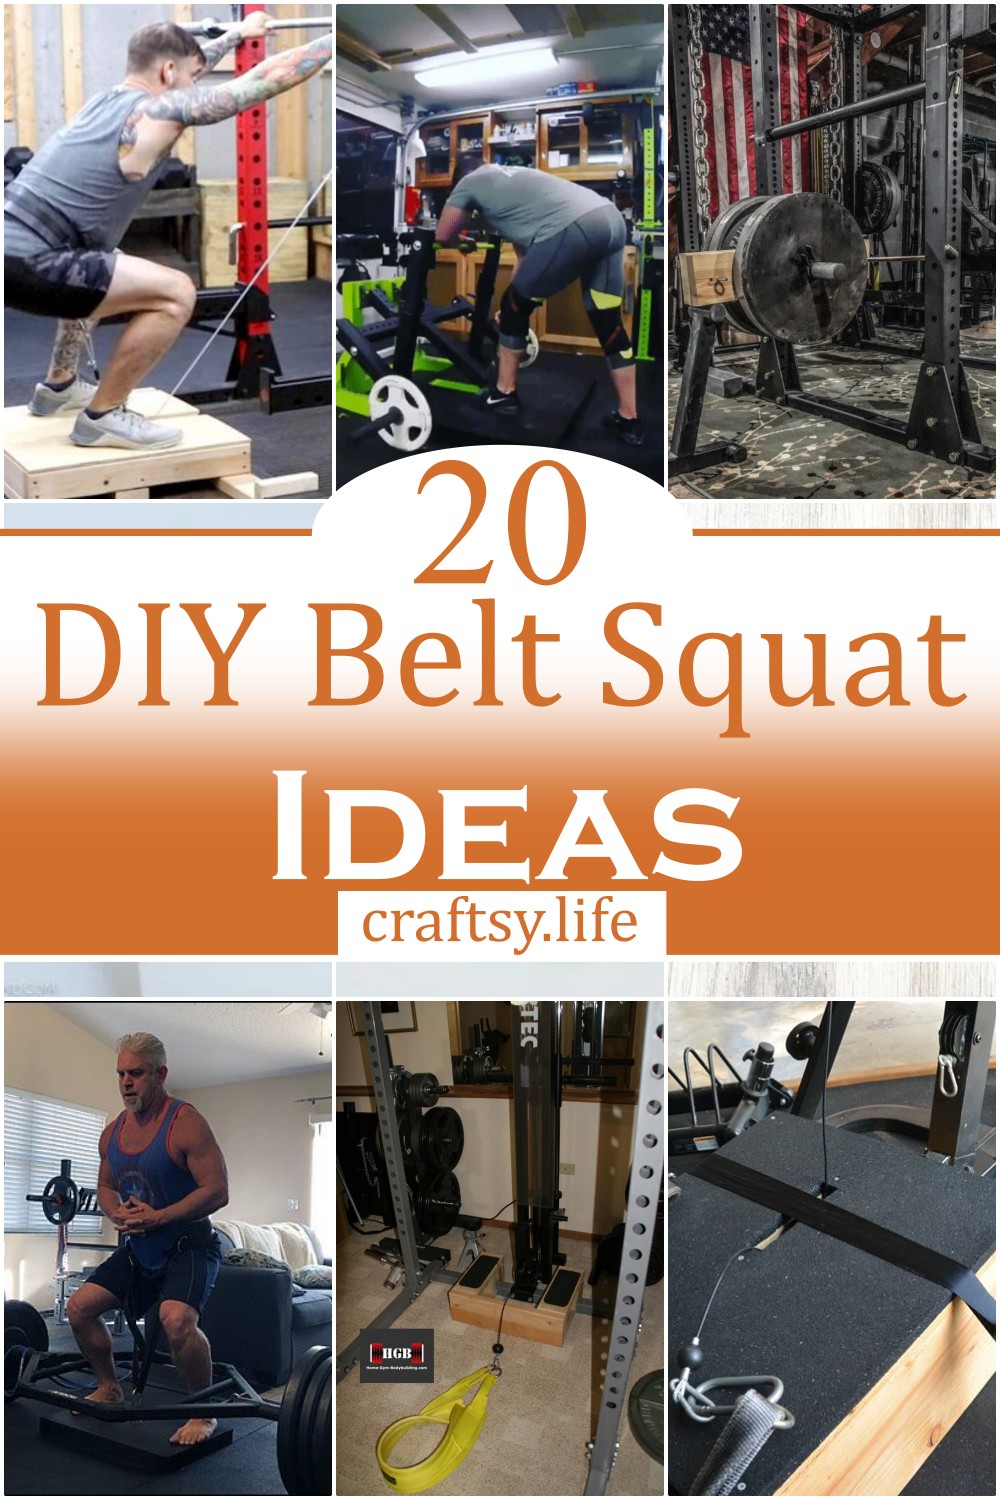 DIY Belt Squat Ideas